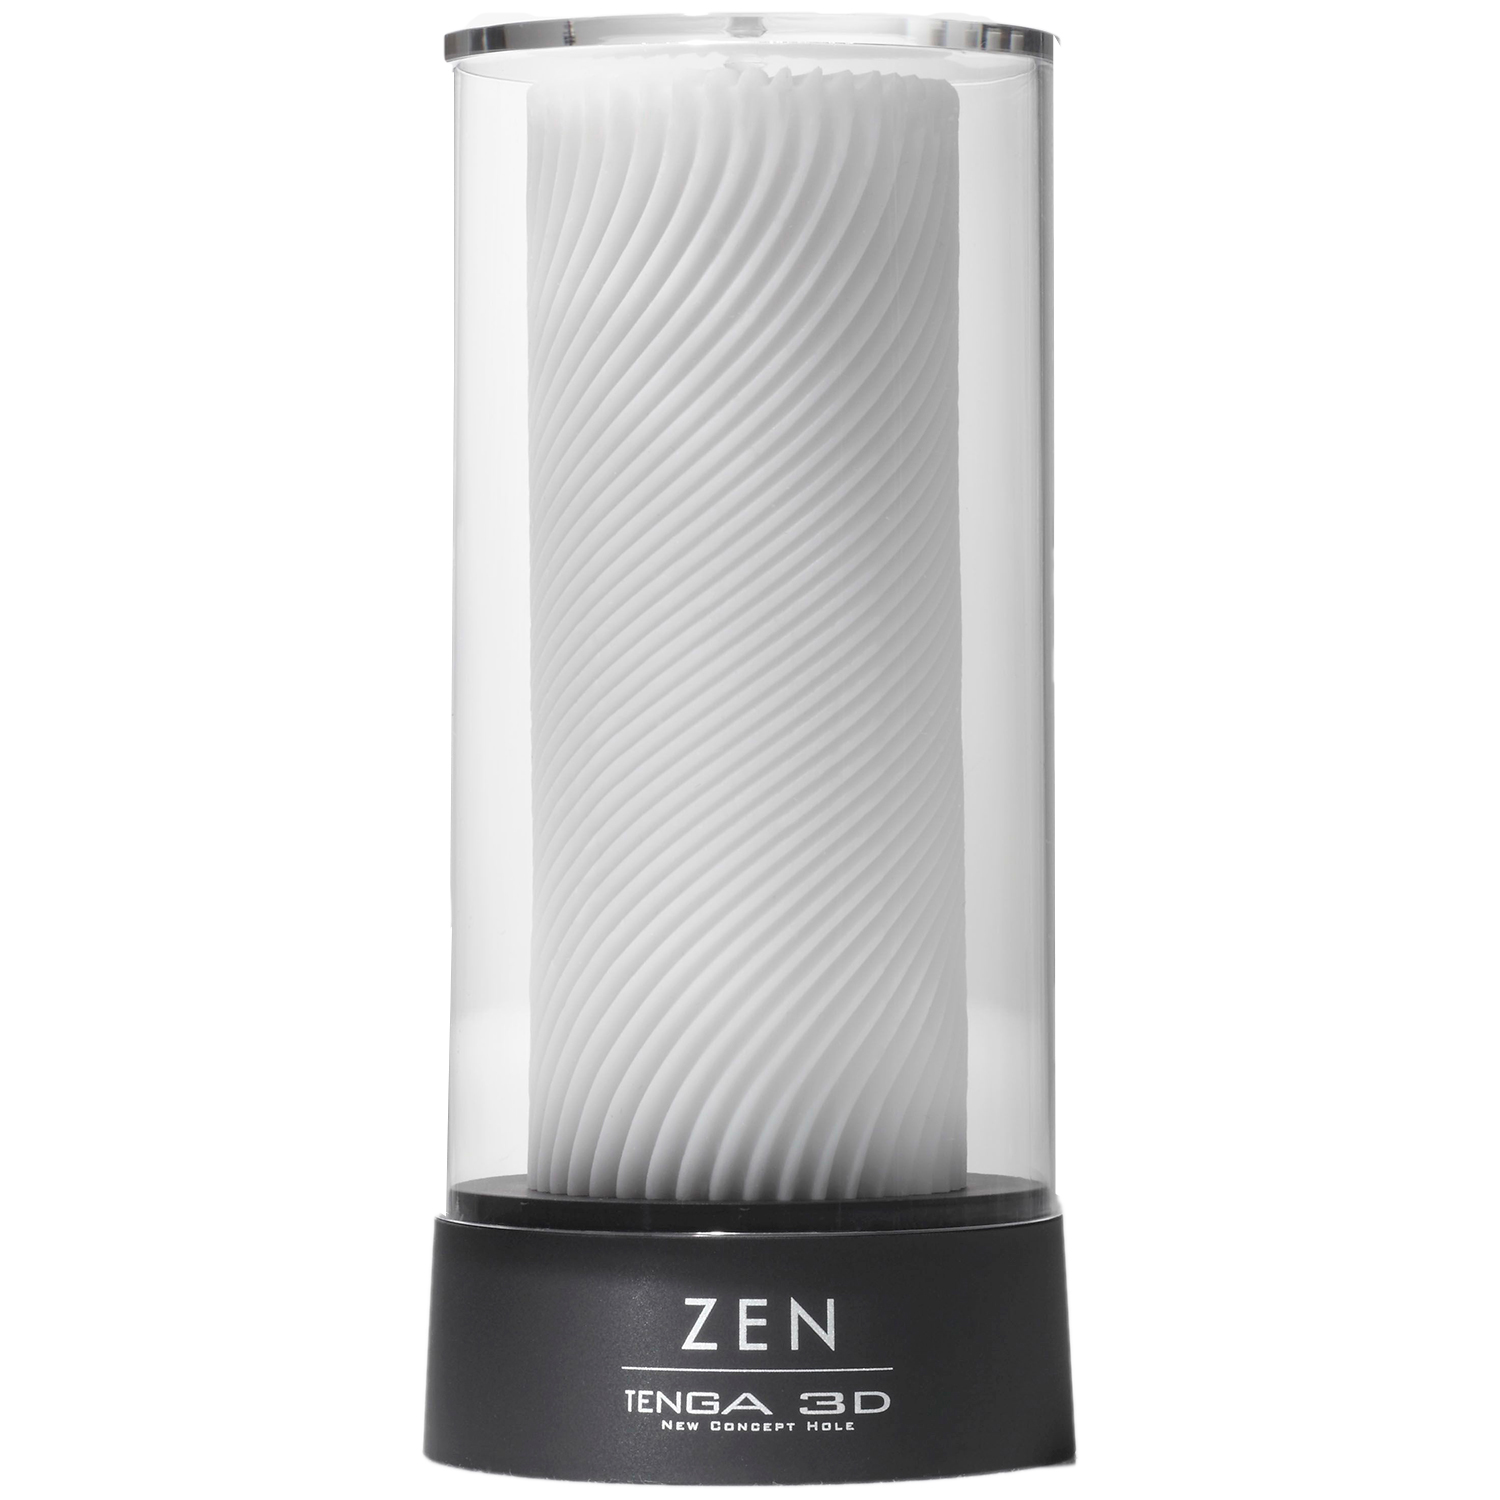 7: TENGA 3D Zen Onaniprodukt       - Hvid